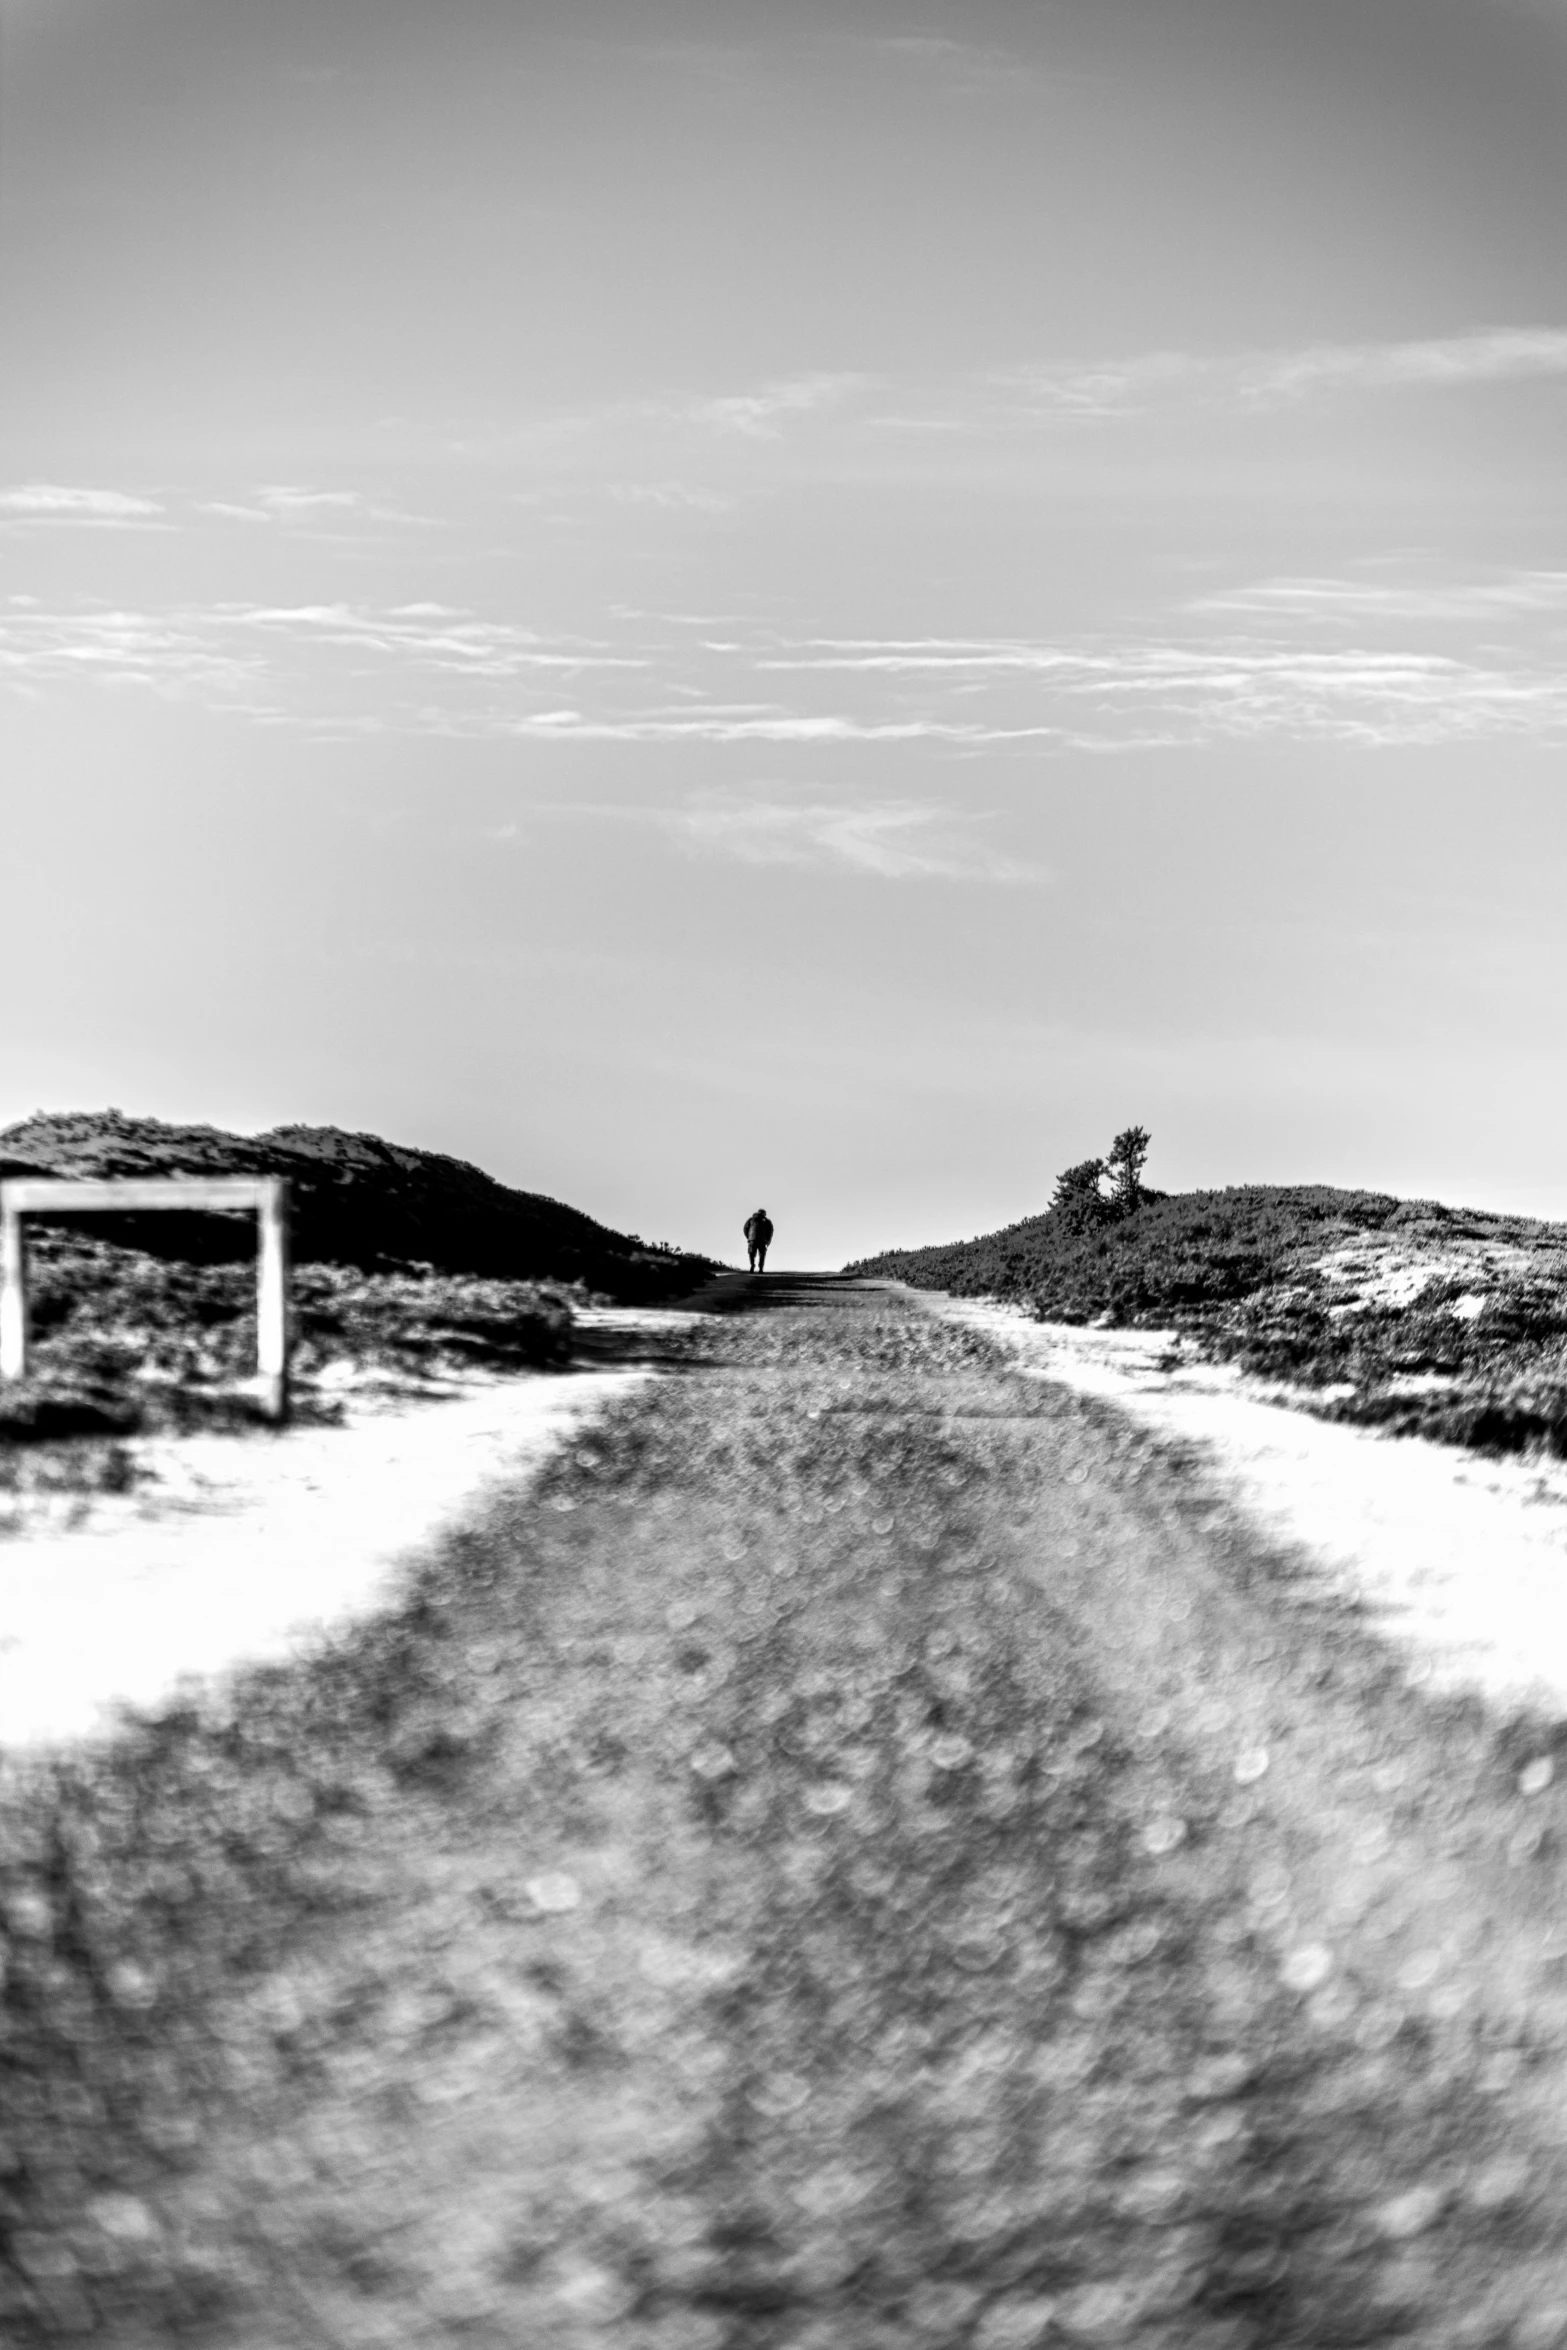 a black and white po shows a lone person